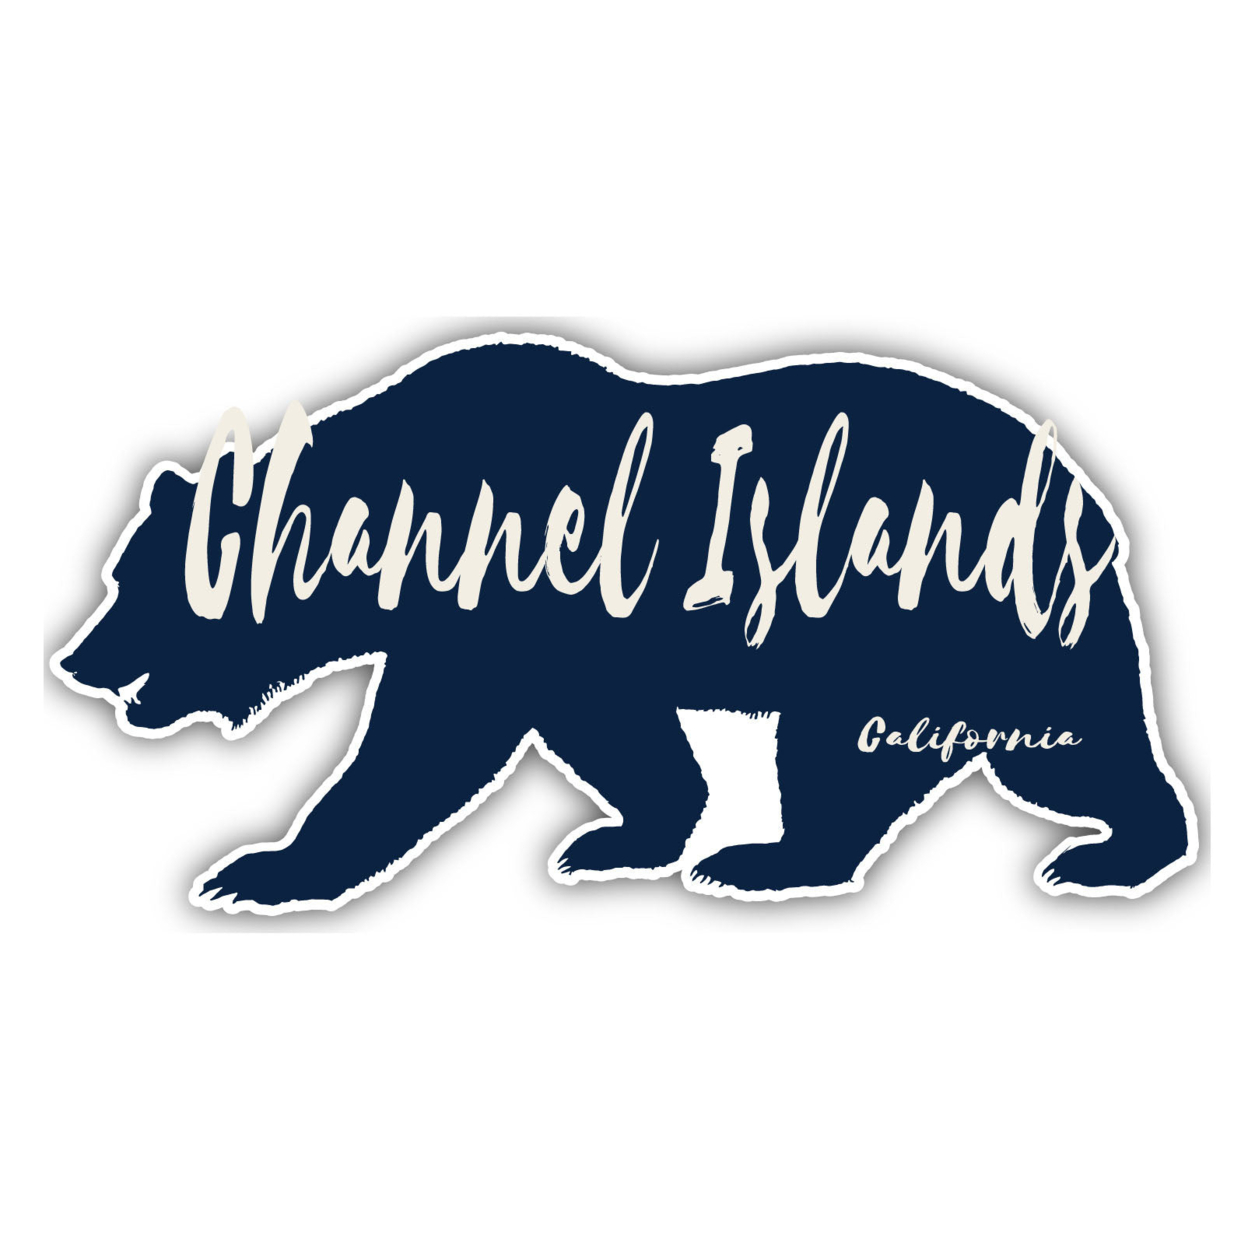 Channel Islands California Souvenir Decorative Stickers (Choose Theme And Size) - Single Unit, 8-Inch, Bear